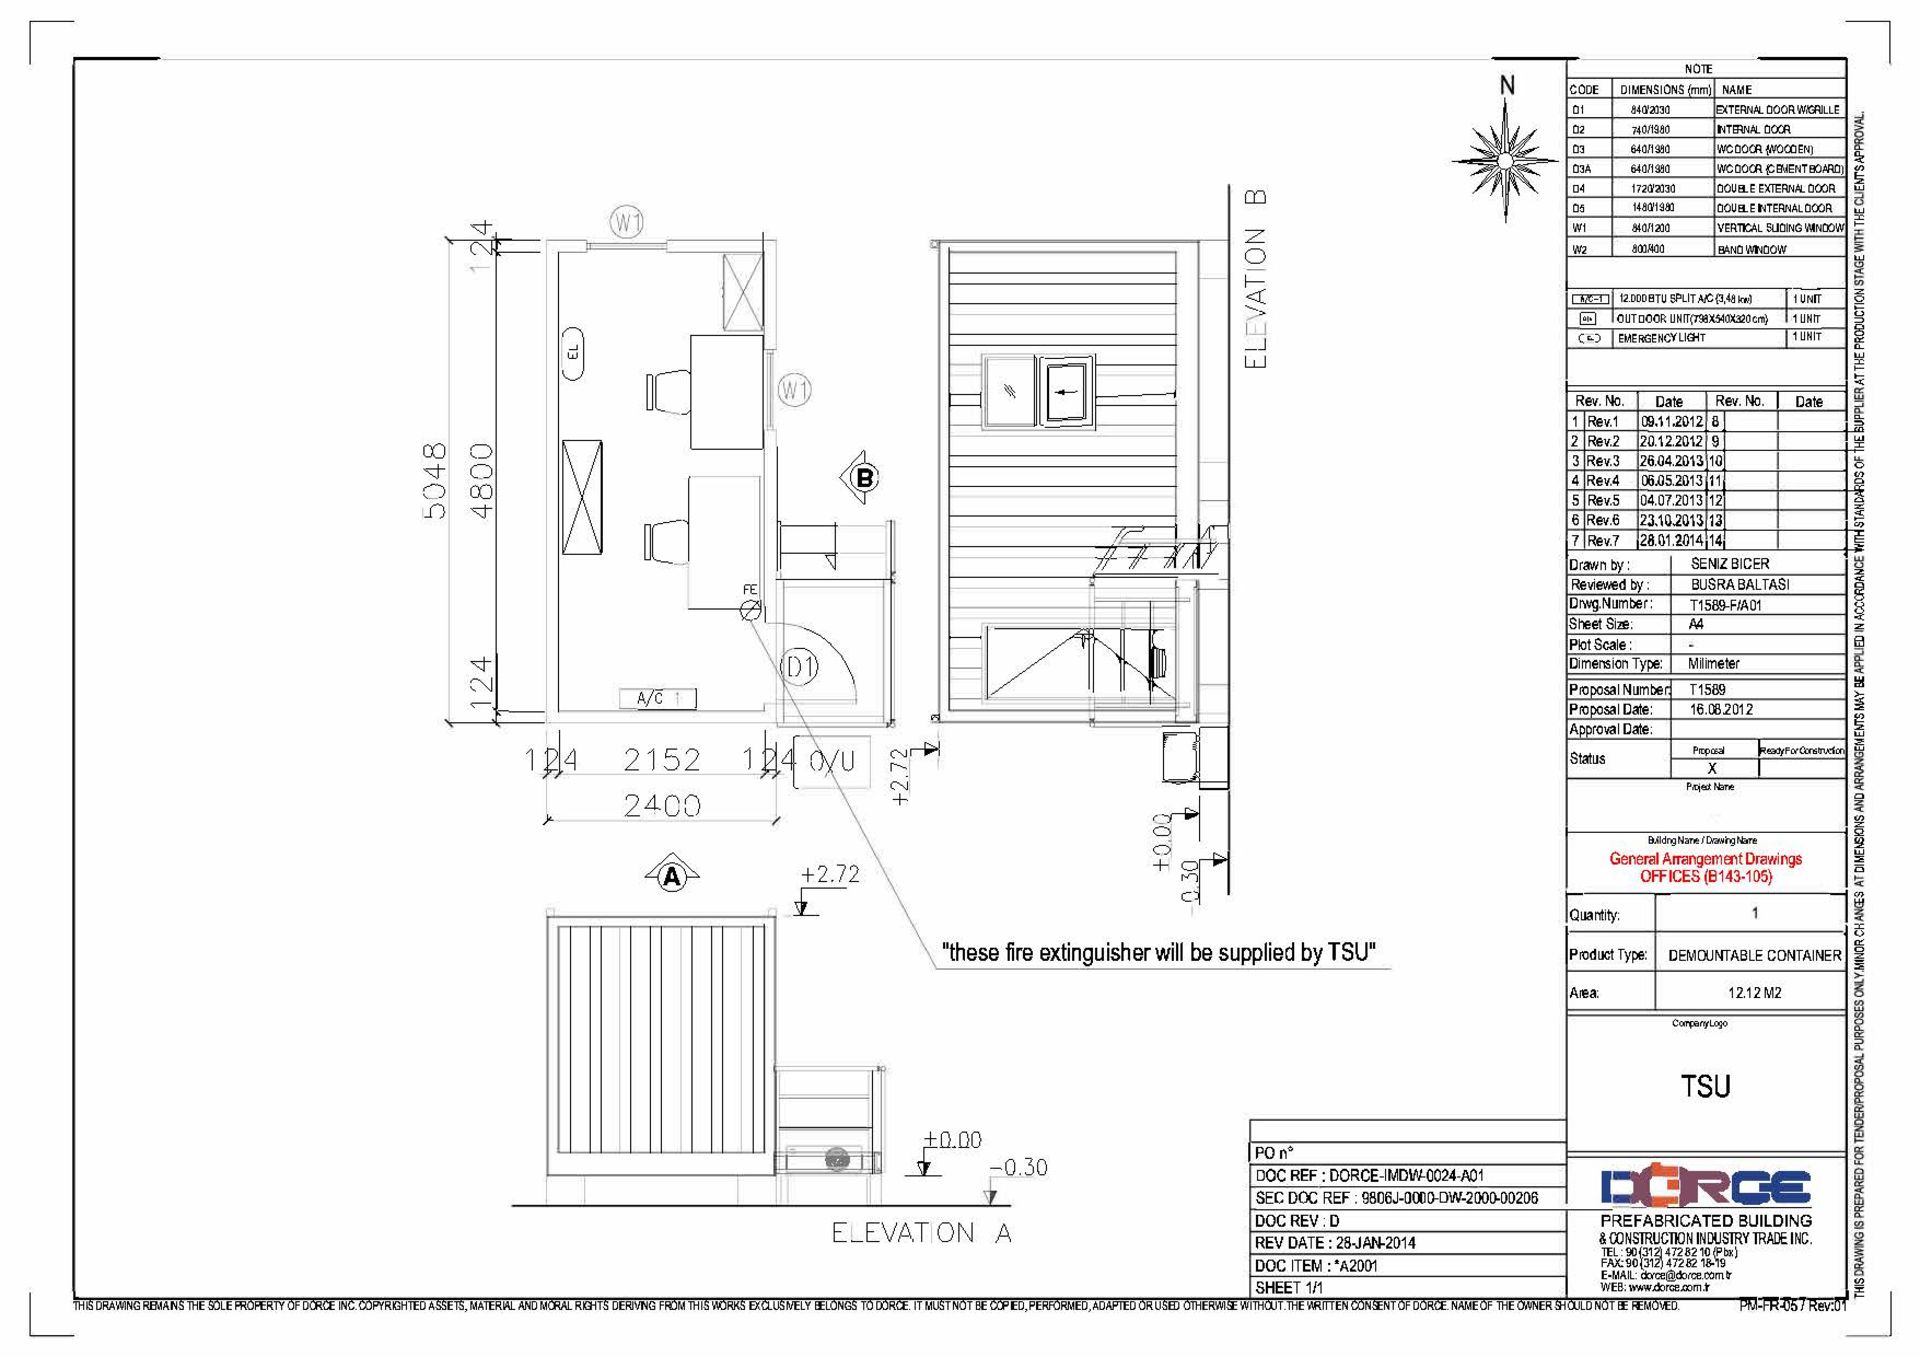 Dorce Modular Office Complex - Image 6 of 75